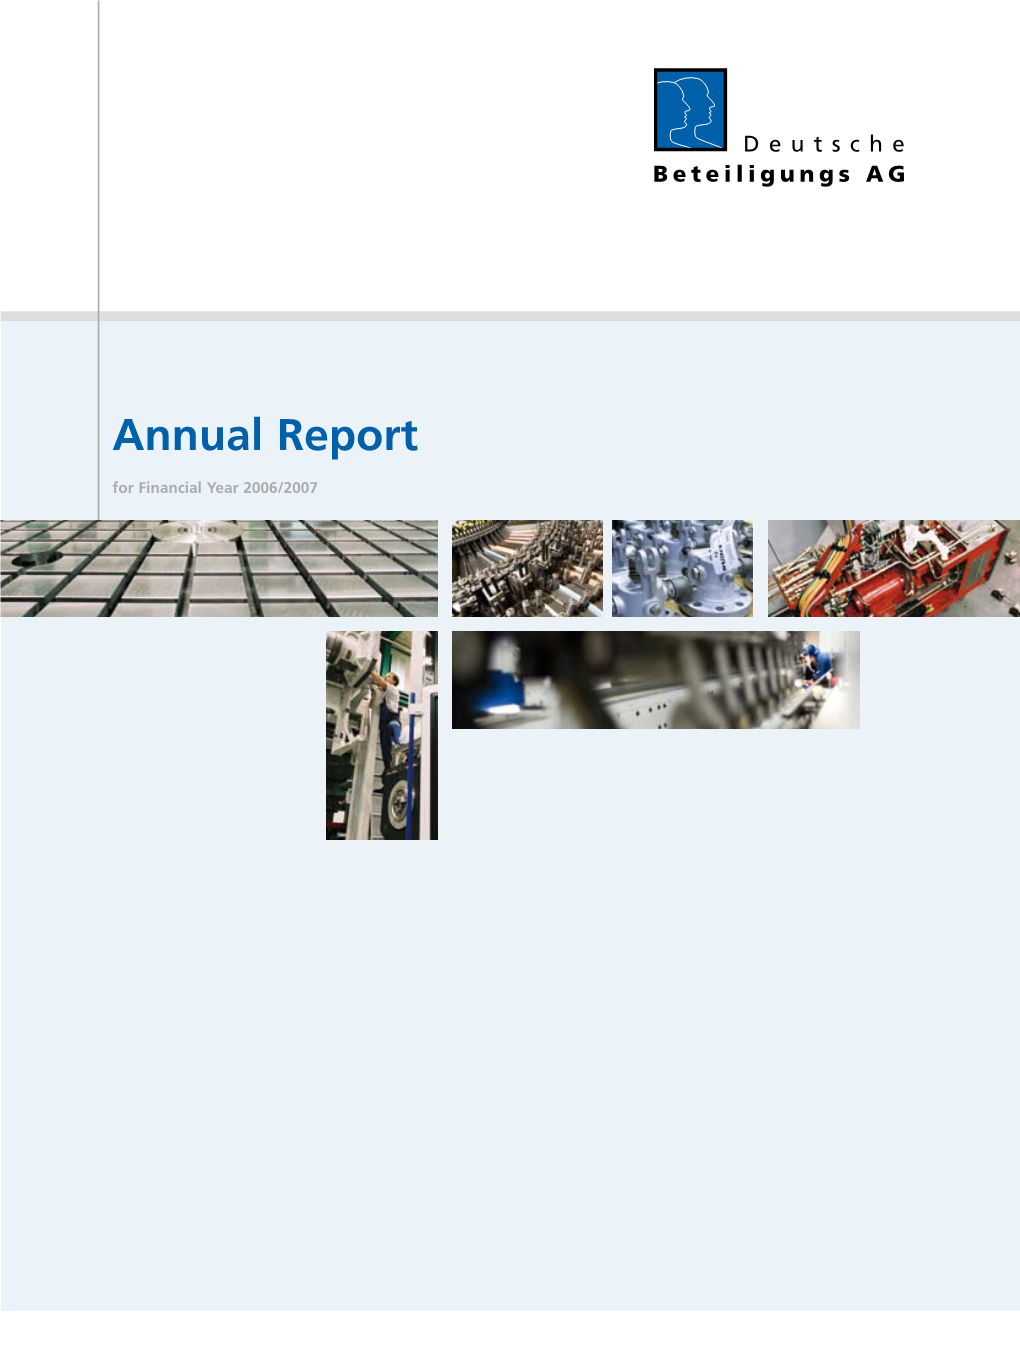 Annual Report for Financial Year 2006/2007 Financial Year 2006/2007 Deutsche Beteiligungs AG